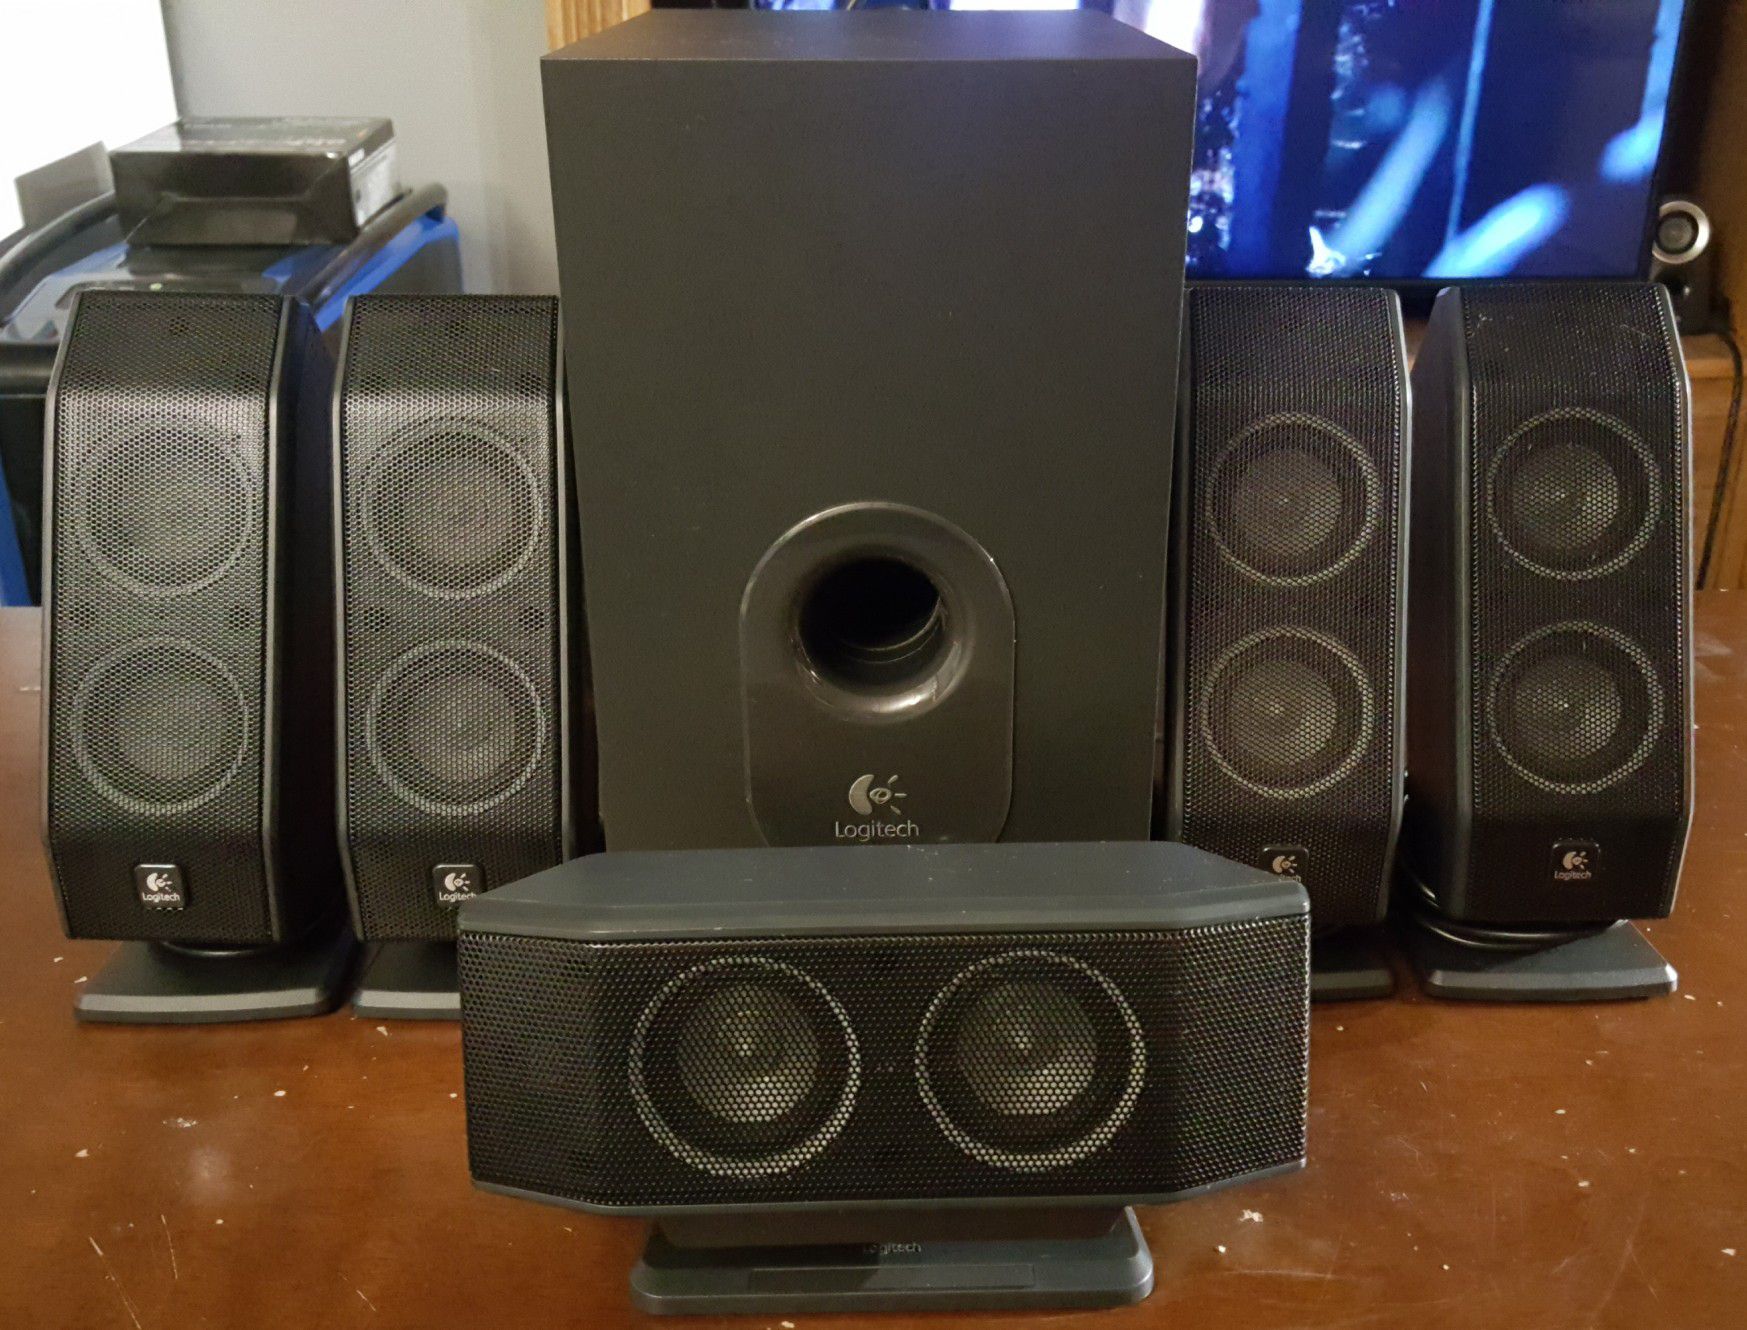 Logitech X540 5.1 Surround speaker system for PC/TV